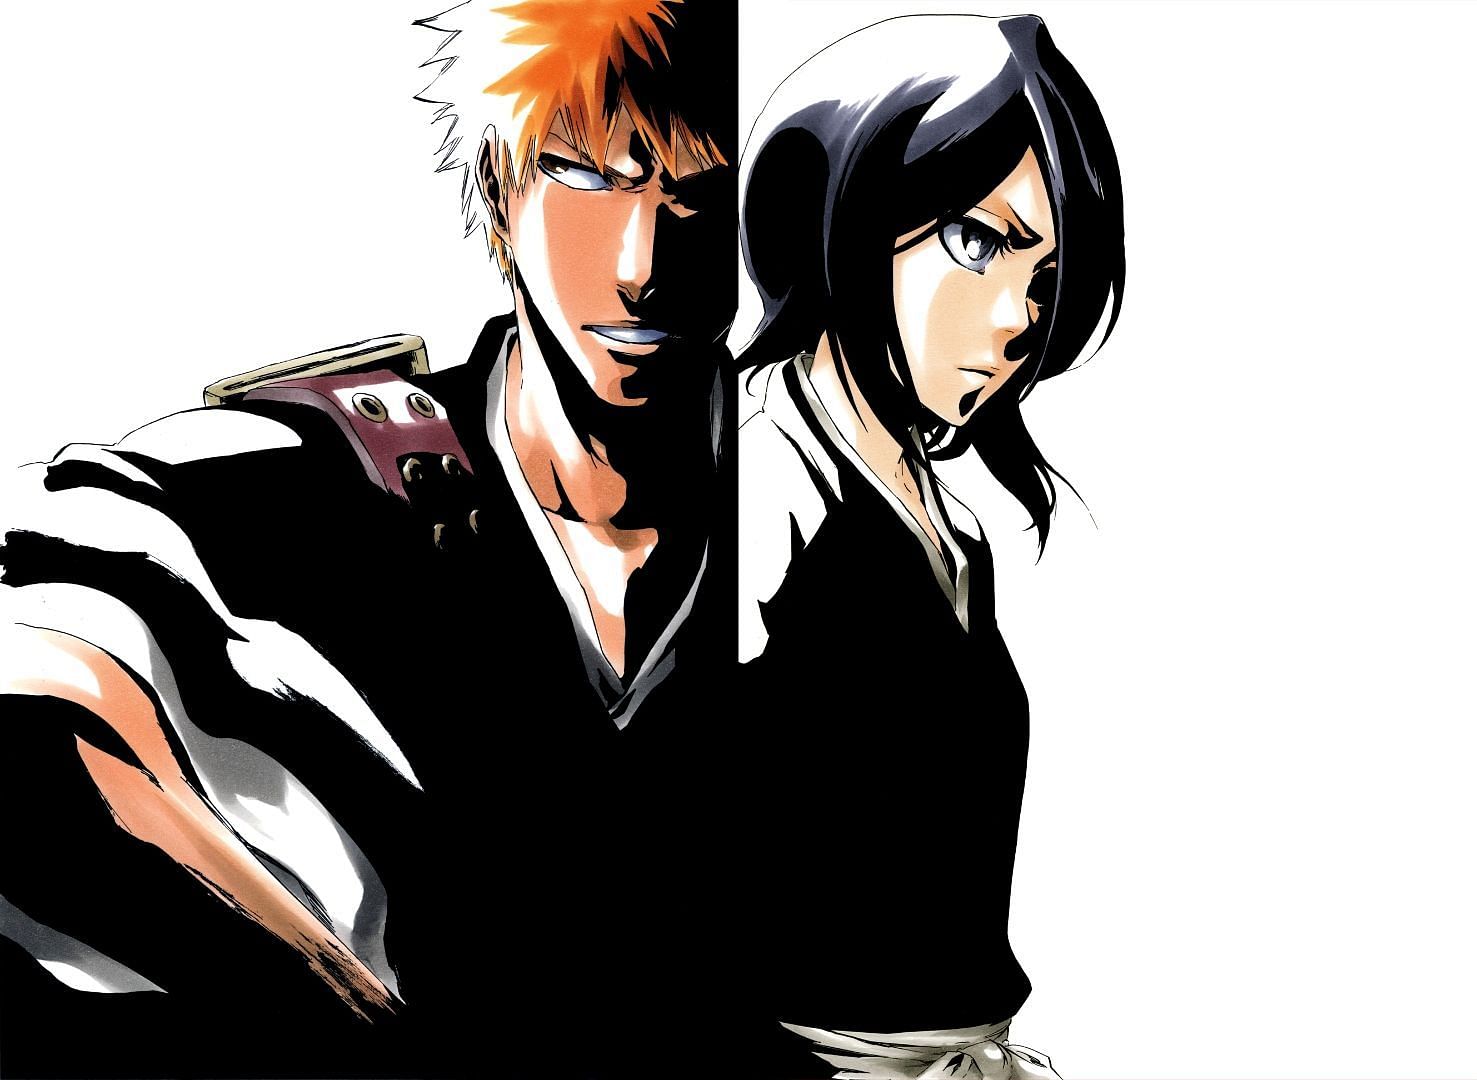 Ichigo and Rukia (Image via Tite Kubo/Shueisha)